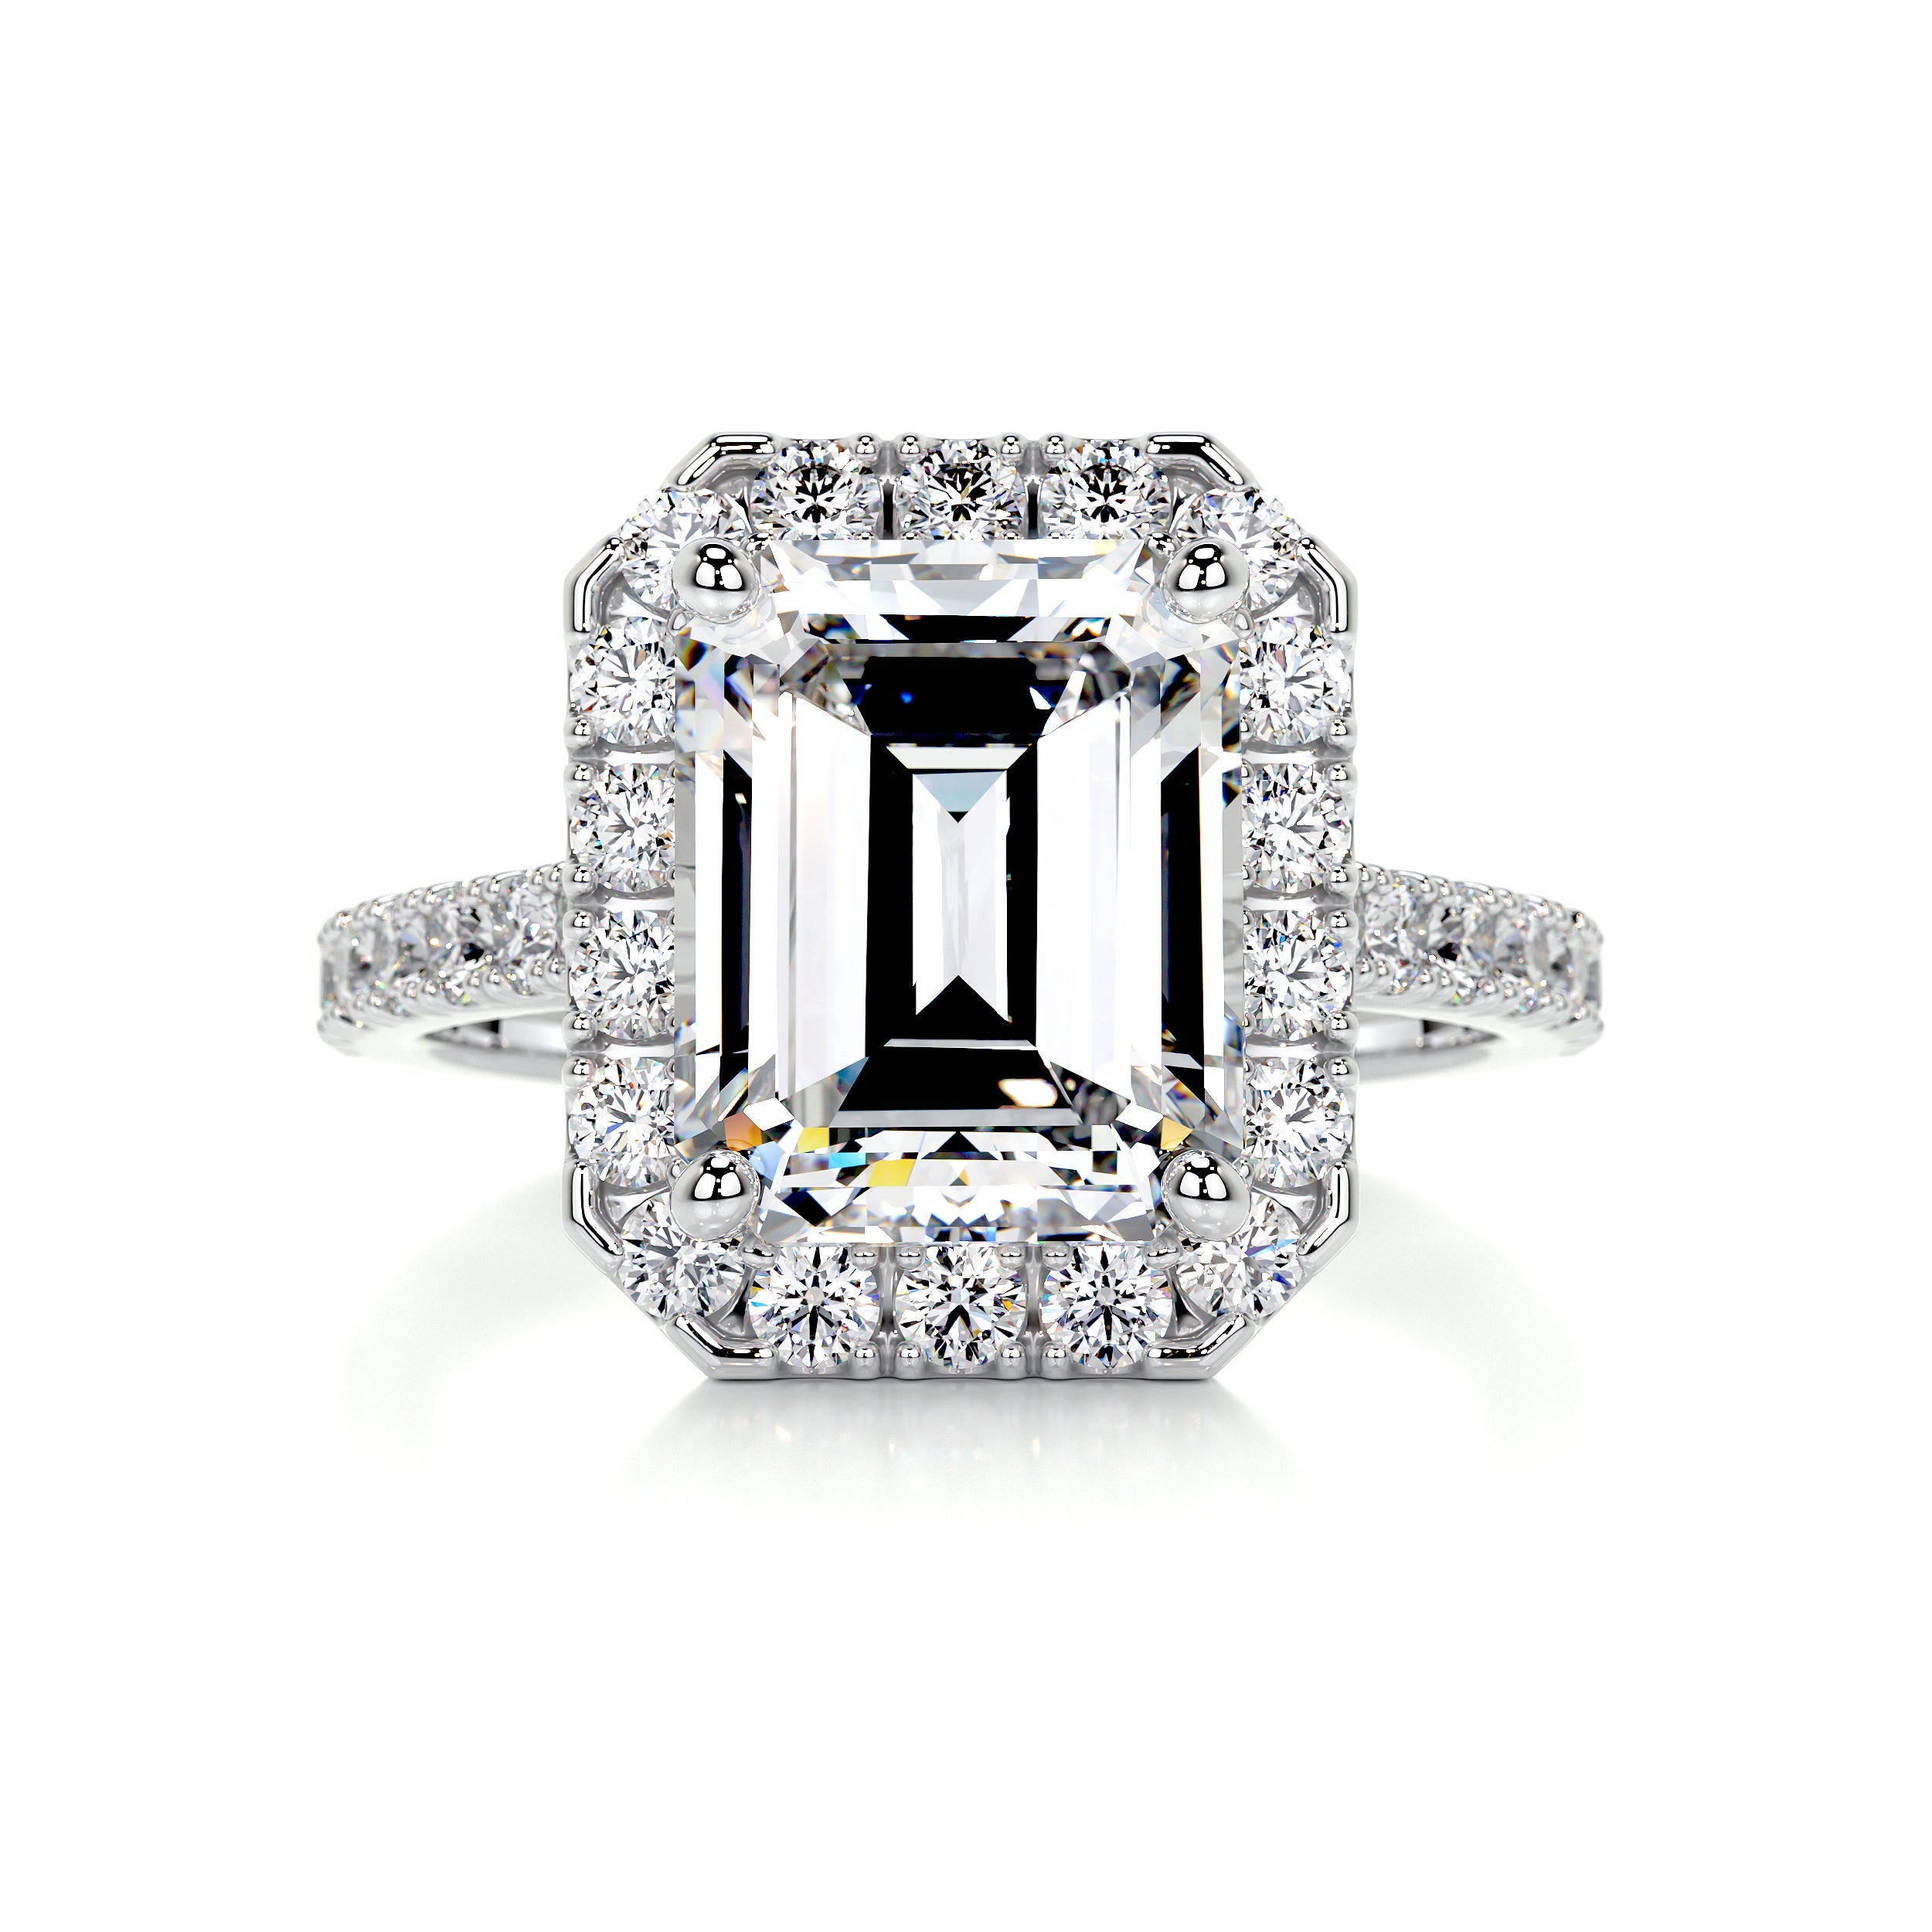 Zoey Diamond Engagement Ring   (2 Carat) -14K White Gold